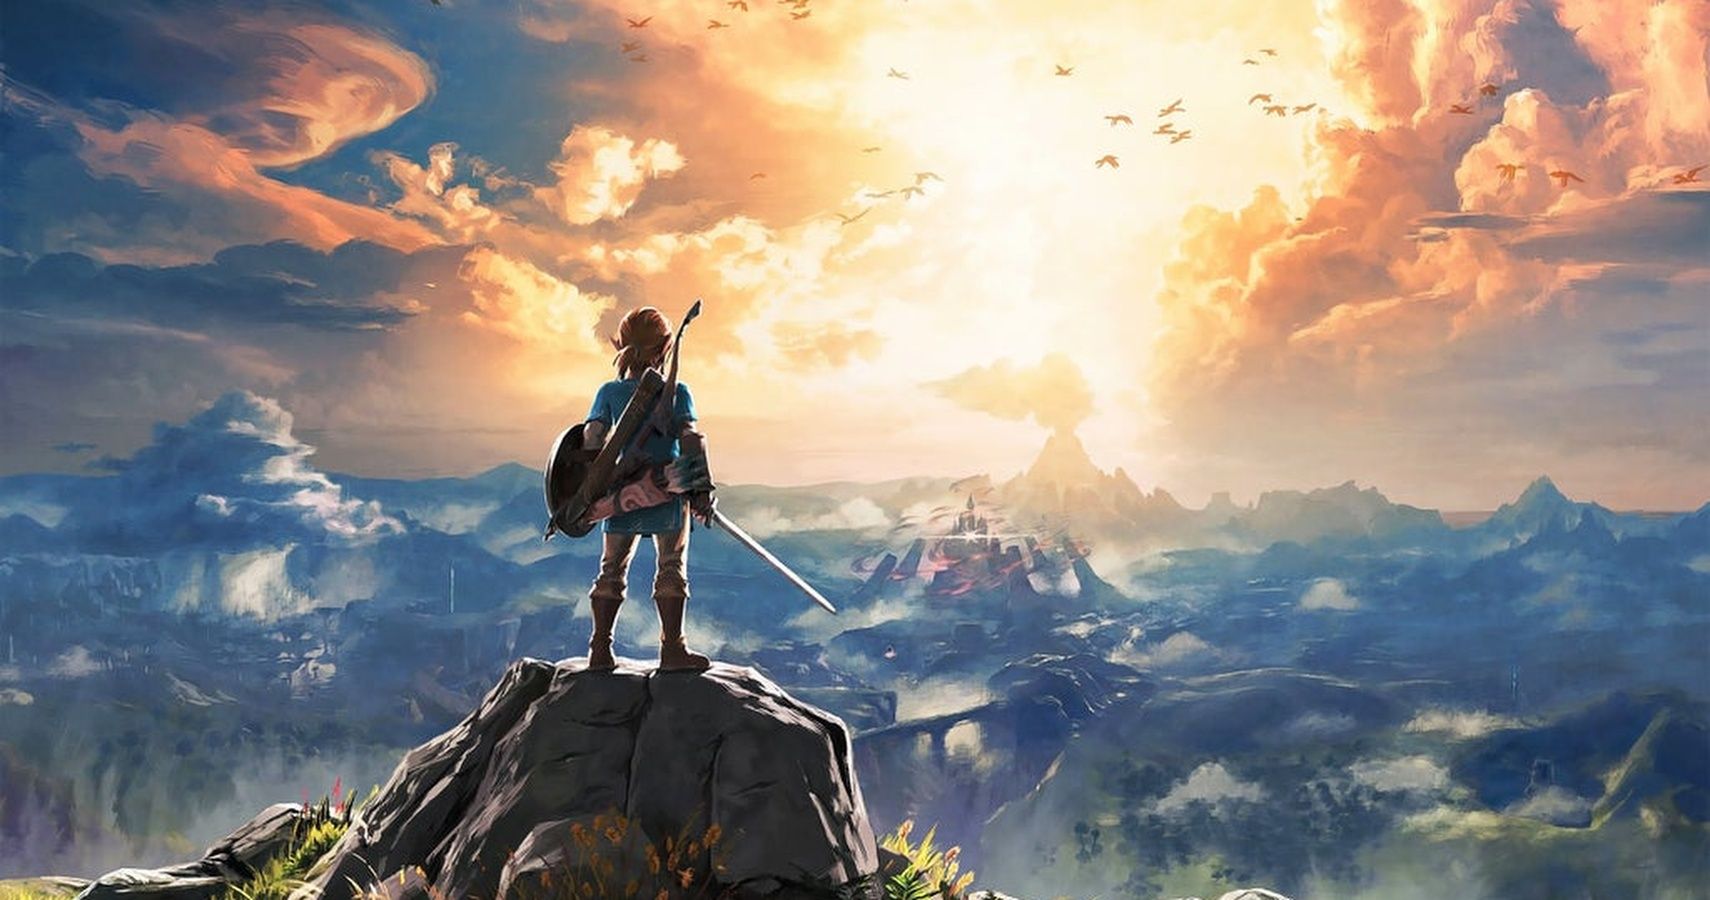 Breath of the Wild 2 Could Start a Brand New Legend of Zelda Timeline